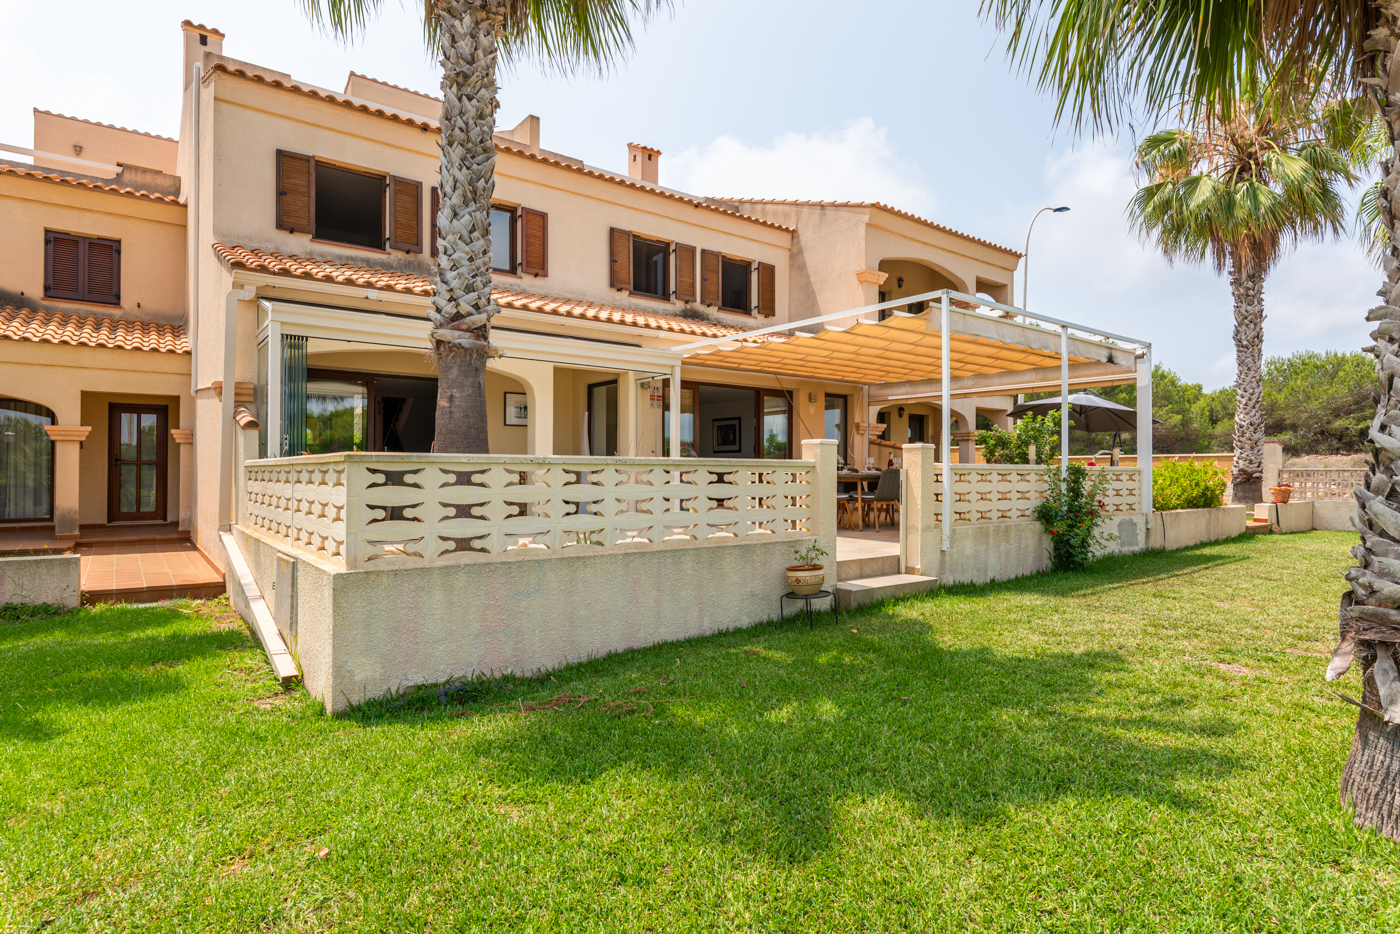 4 bedroom house / villa for sale in Gran Alacant, Costa Blanca